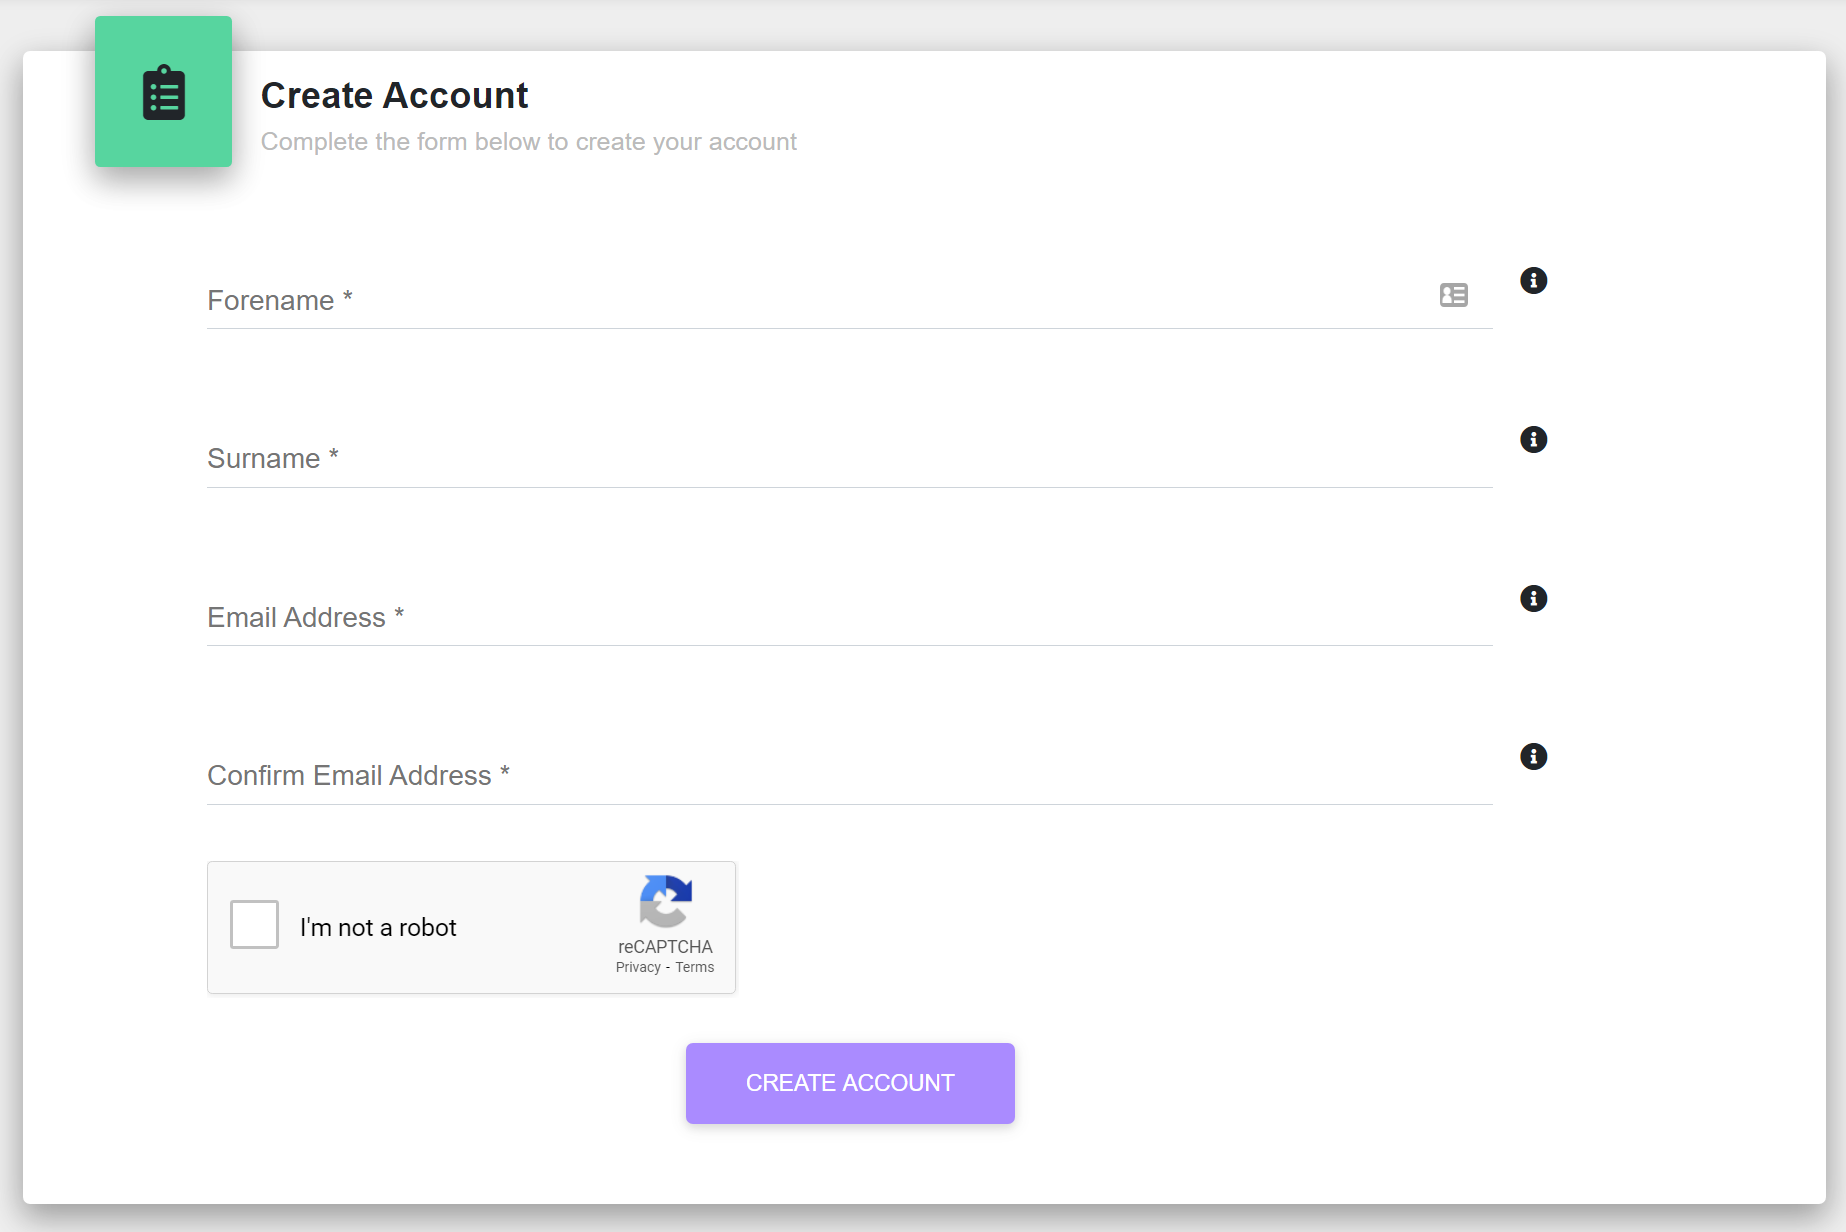 Account Details Screen